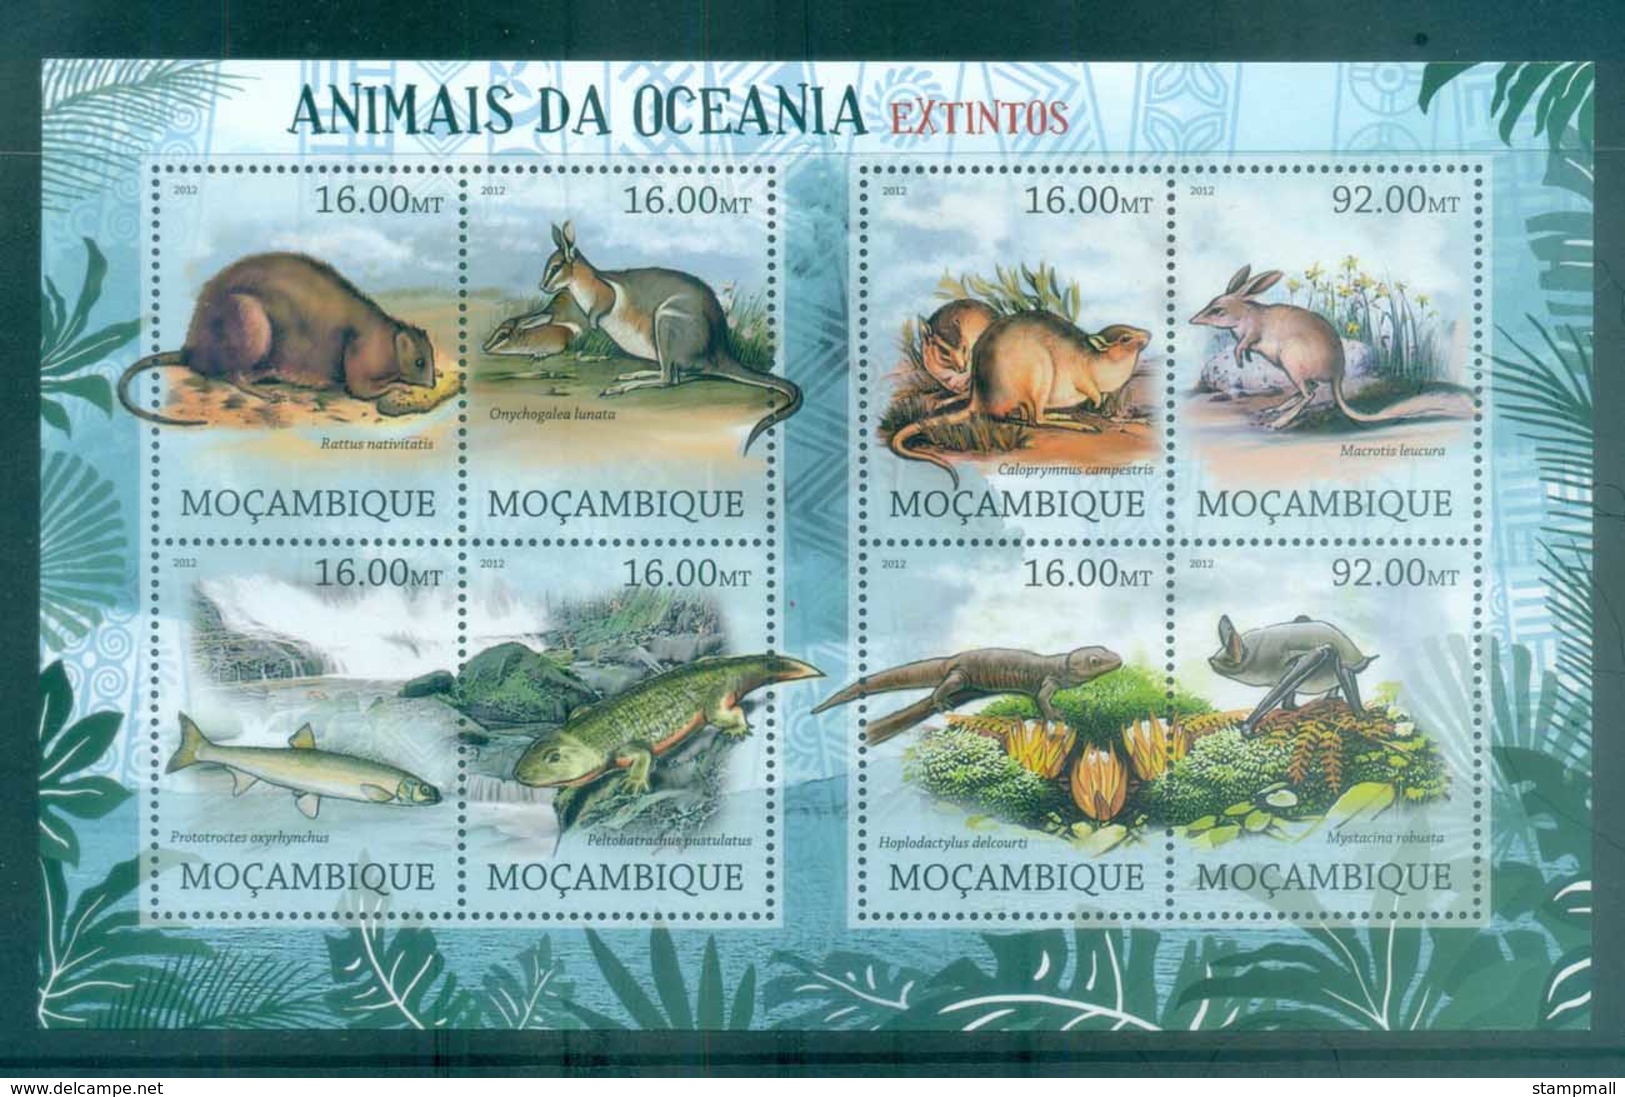 Mozambique 2012 Wildlife, Endangered, Oceania, Kangaroo, Fish, Bat, Rodent MS MUH MOZ12228a - Mozambique